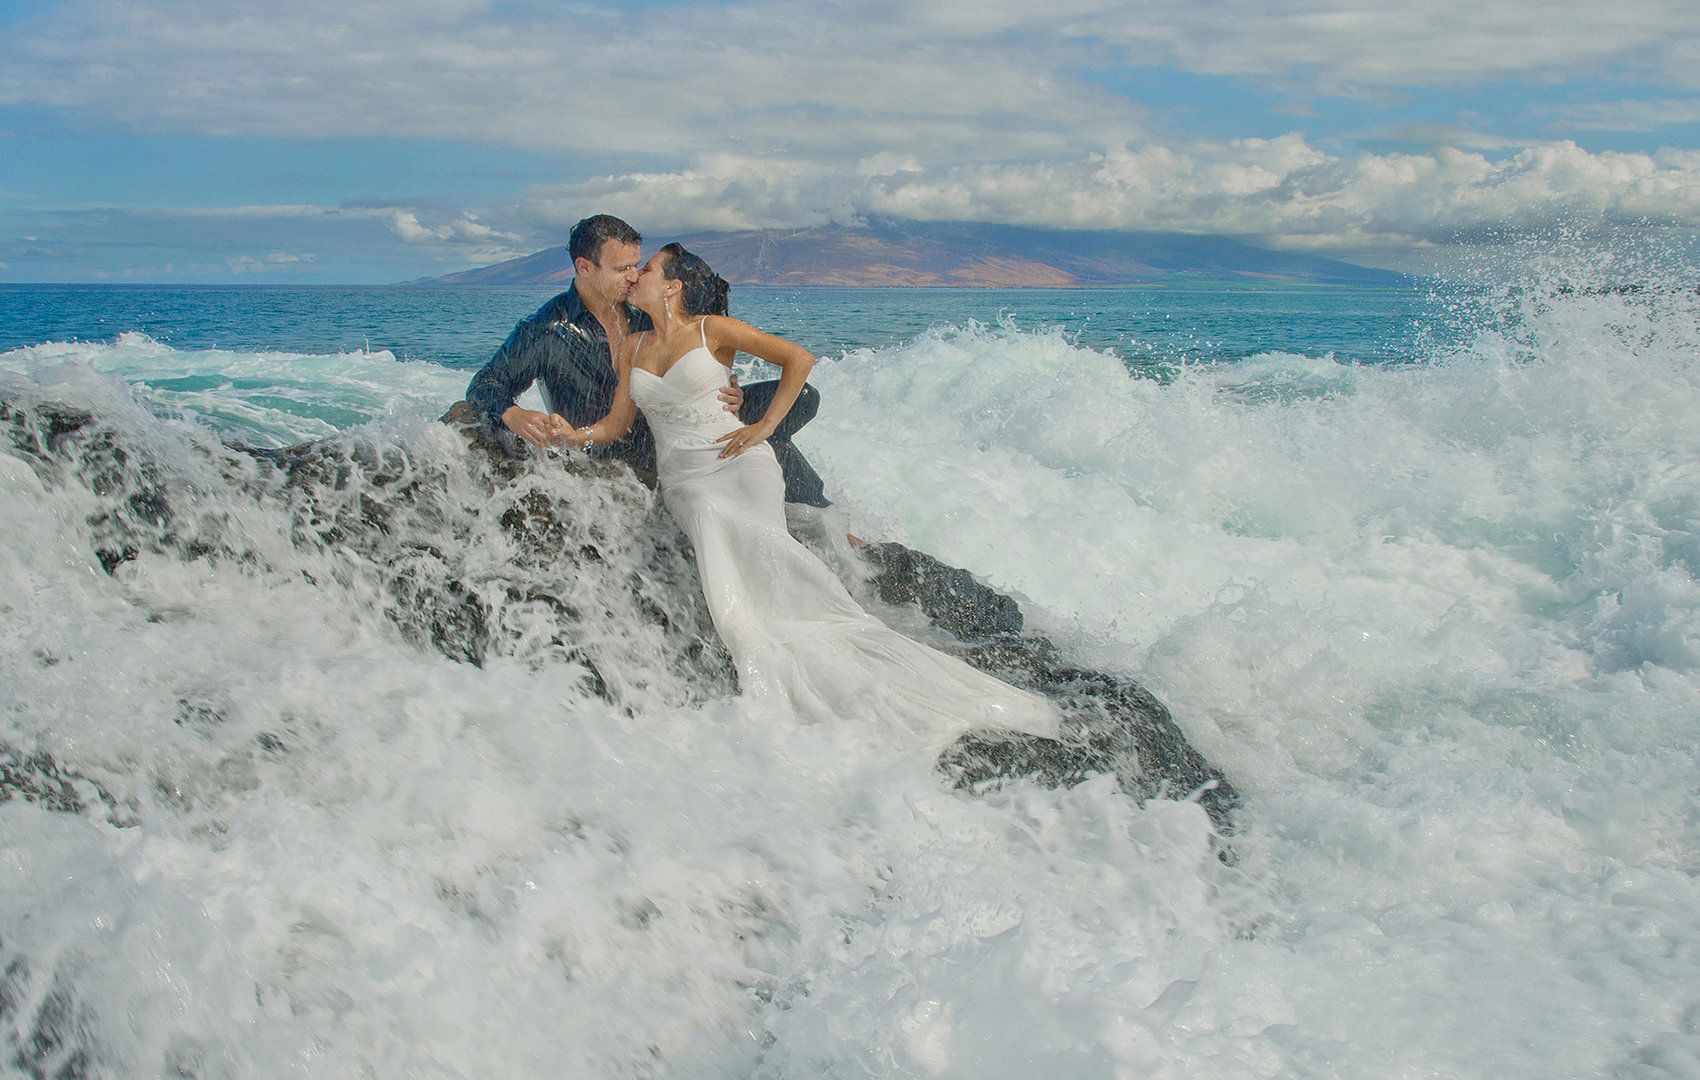 very wet wedding couple enjoy getting wet for their honeymoon shoot.